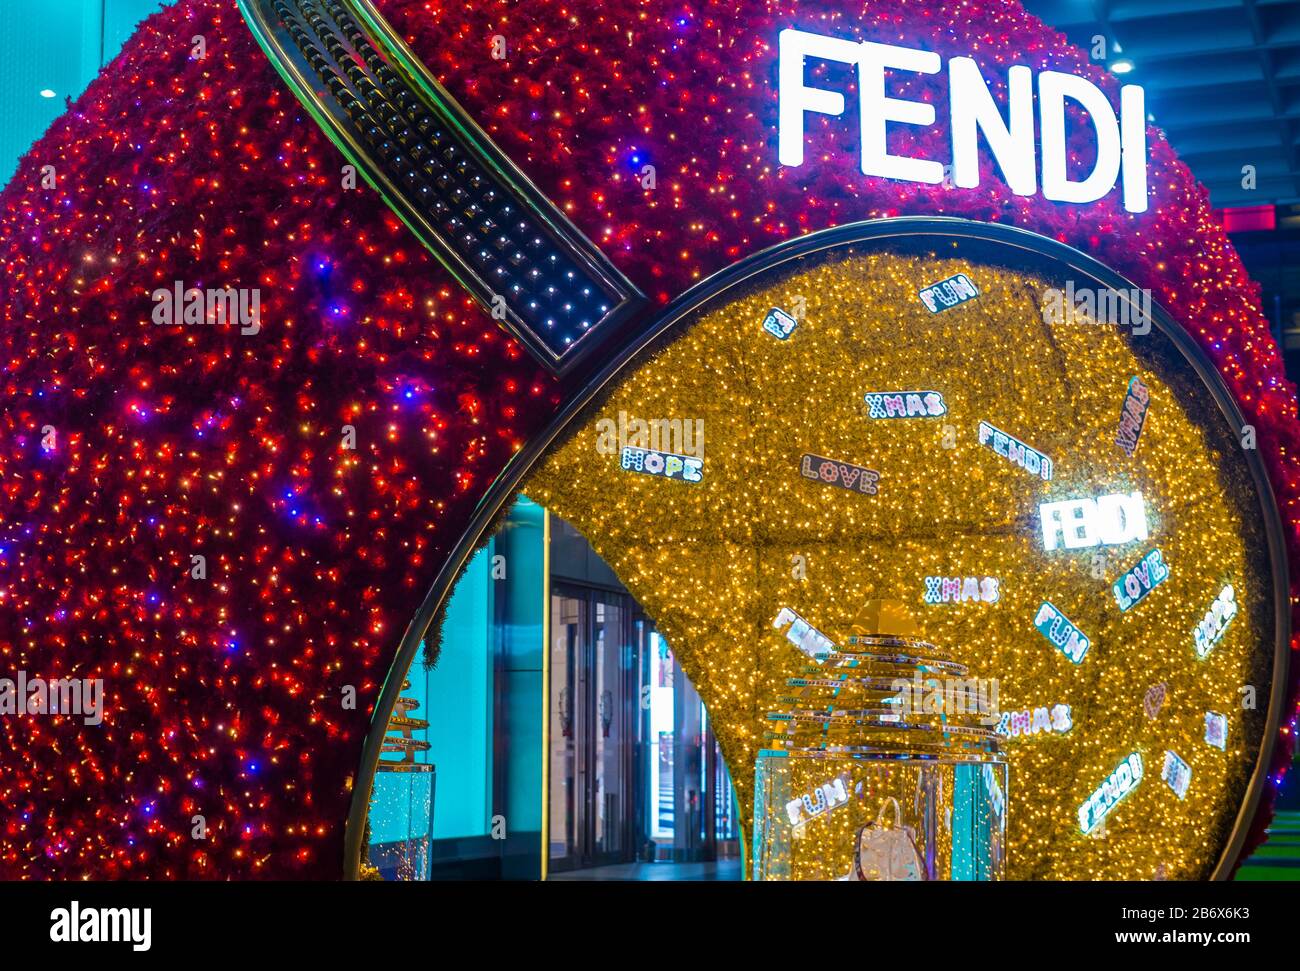 Exterior of a Fendi store in Taipei Taiwan Stock Photo